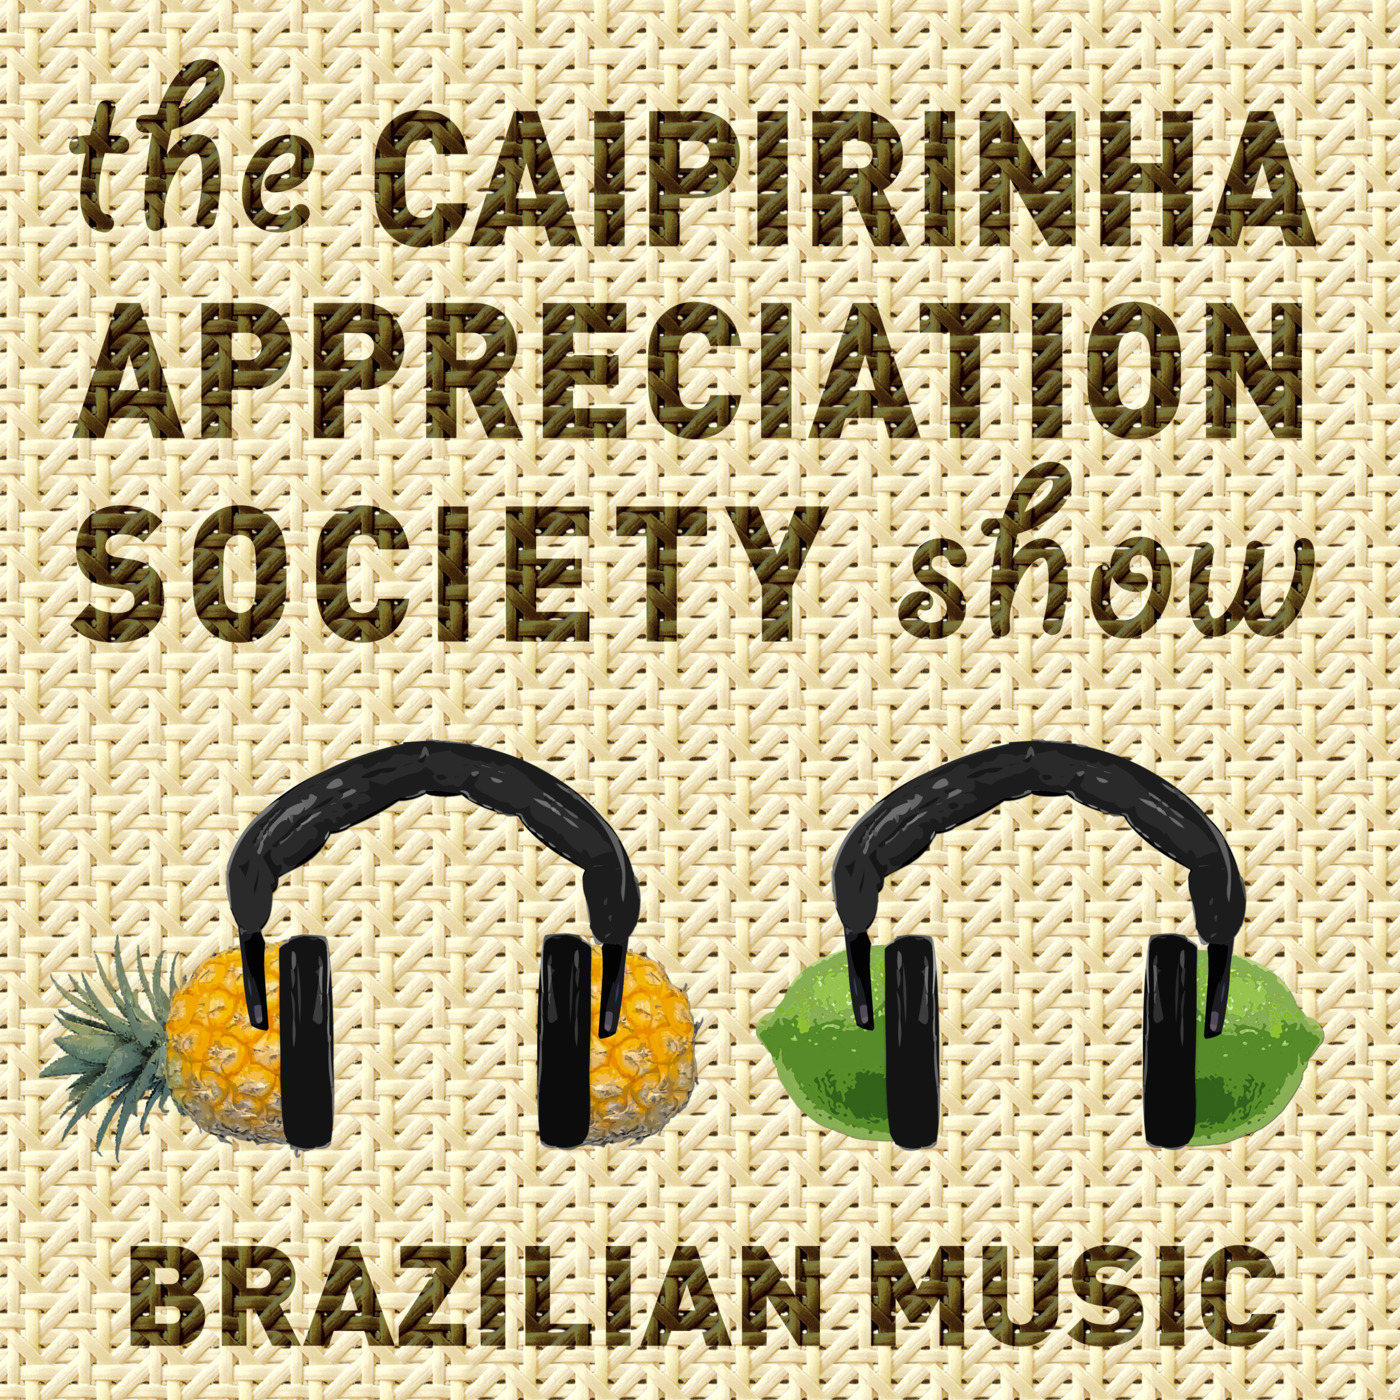 Caipirinha Appreciation Society: Brazilian music beyond the clichés